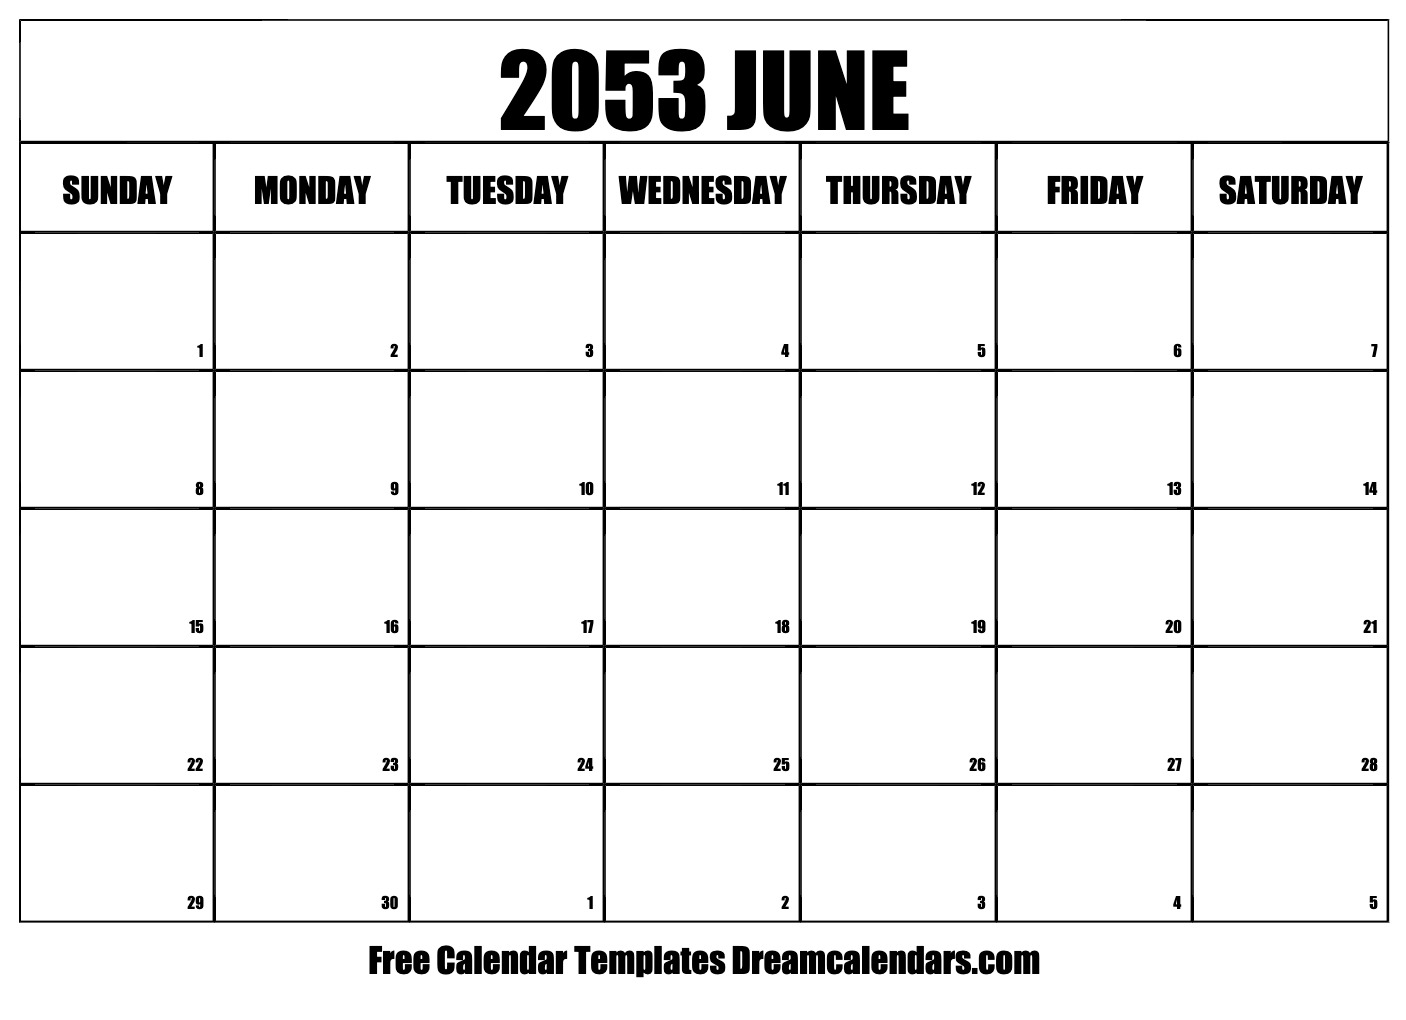 june-2053-calendar-free-blank-printable-with-holidays